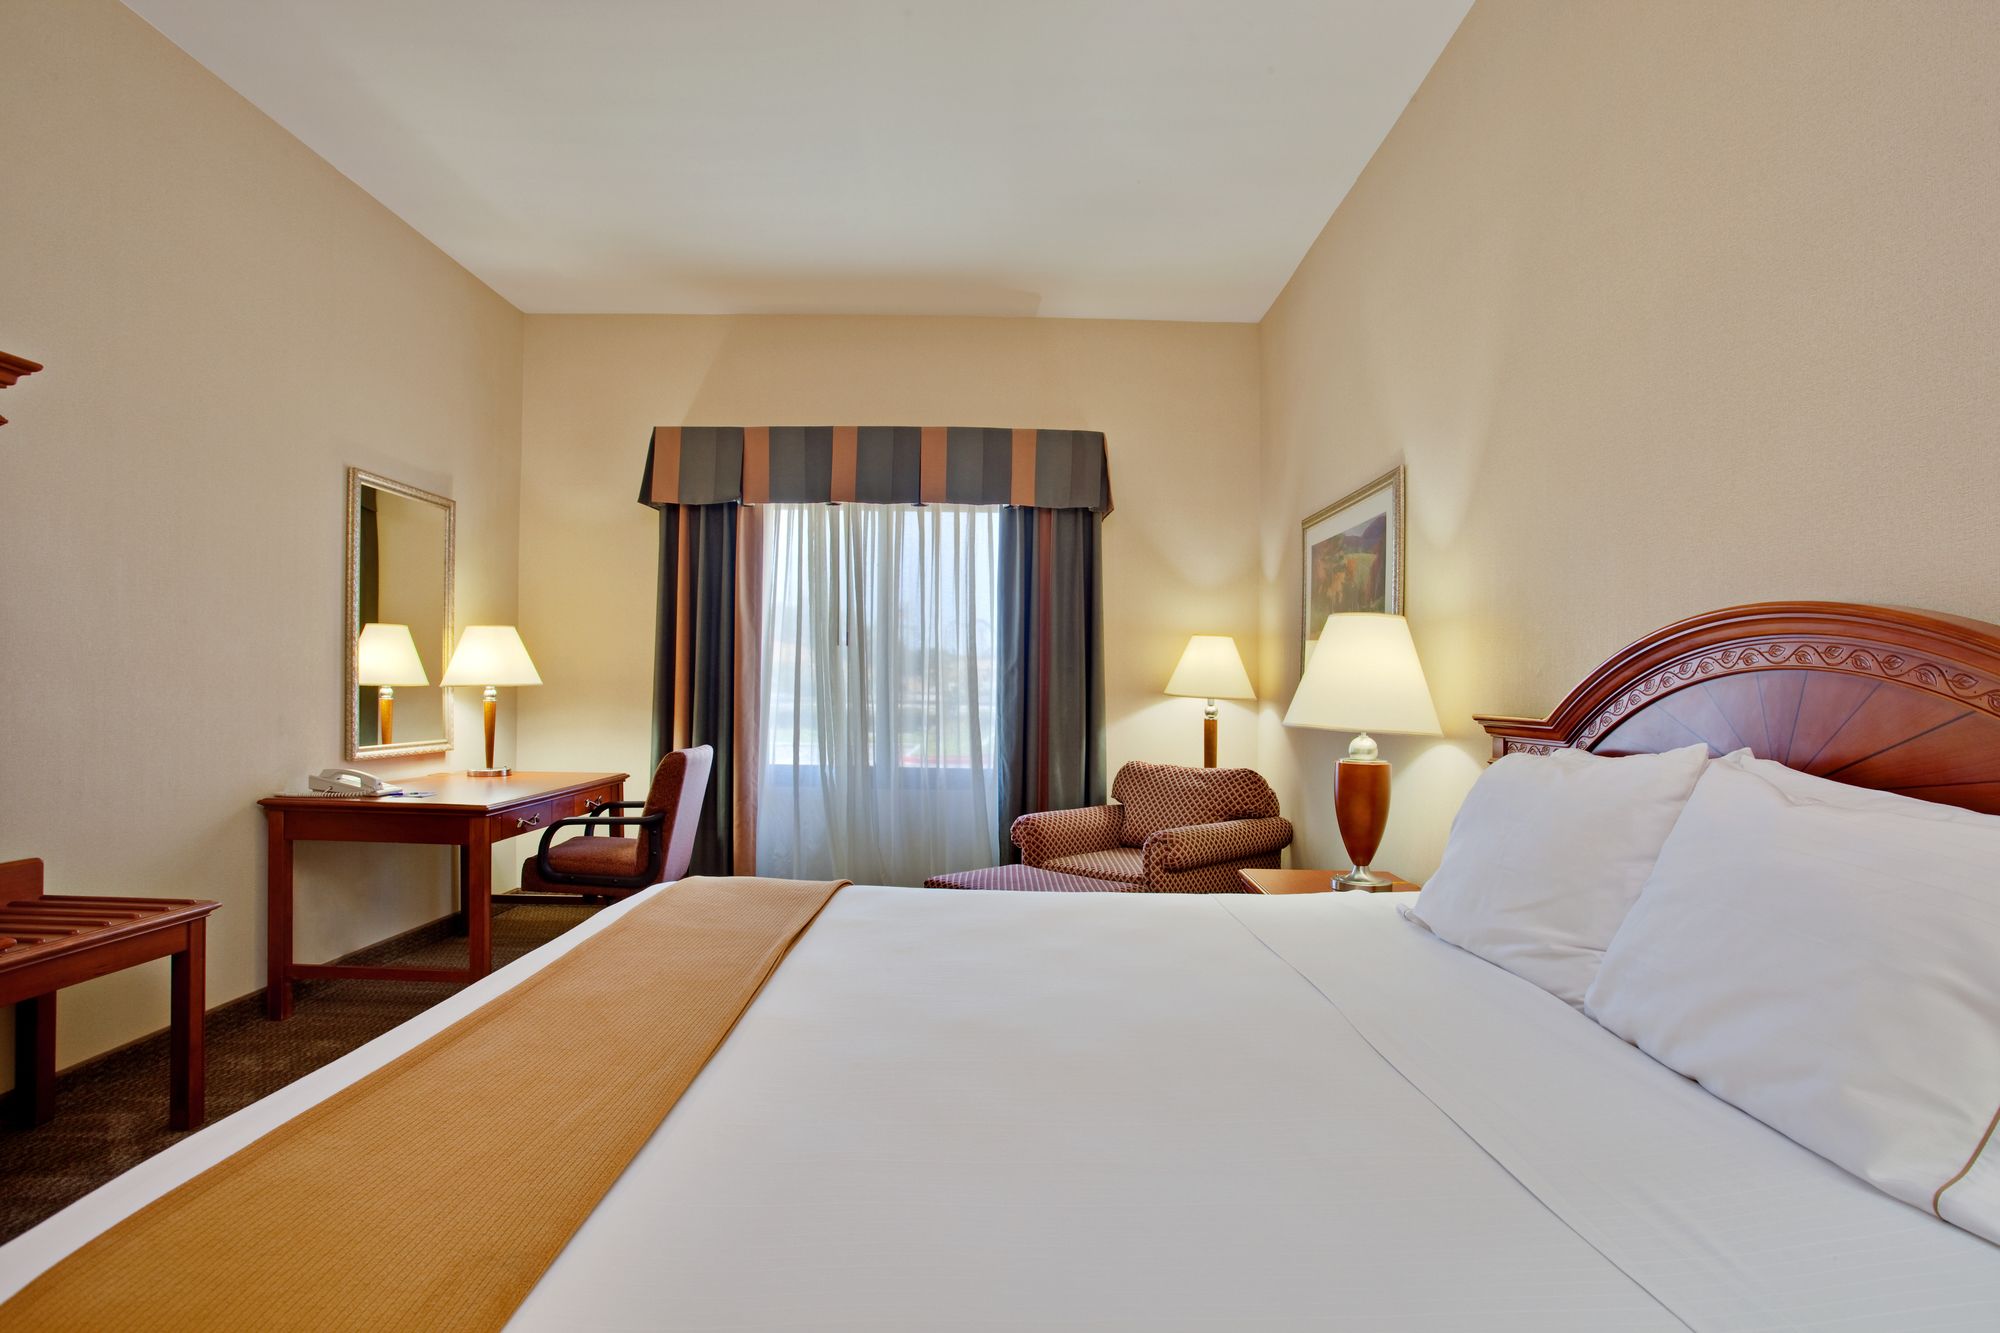 Holiday Inn Express & Suites Valencia - Santa Clarita